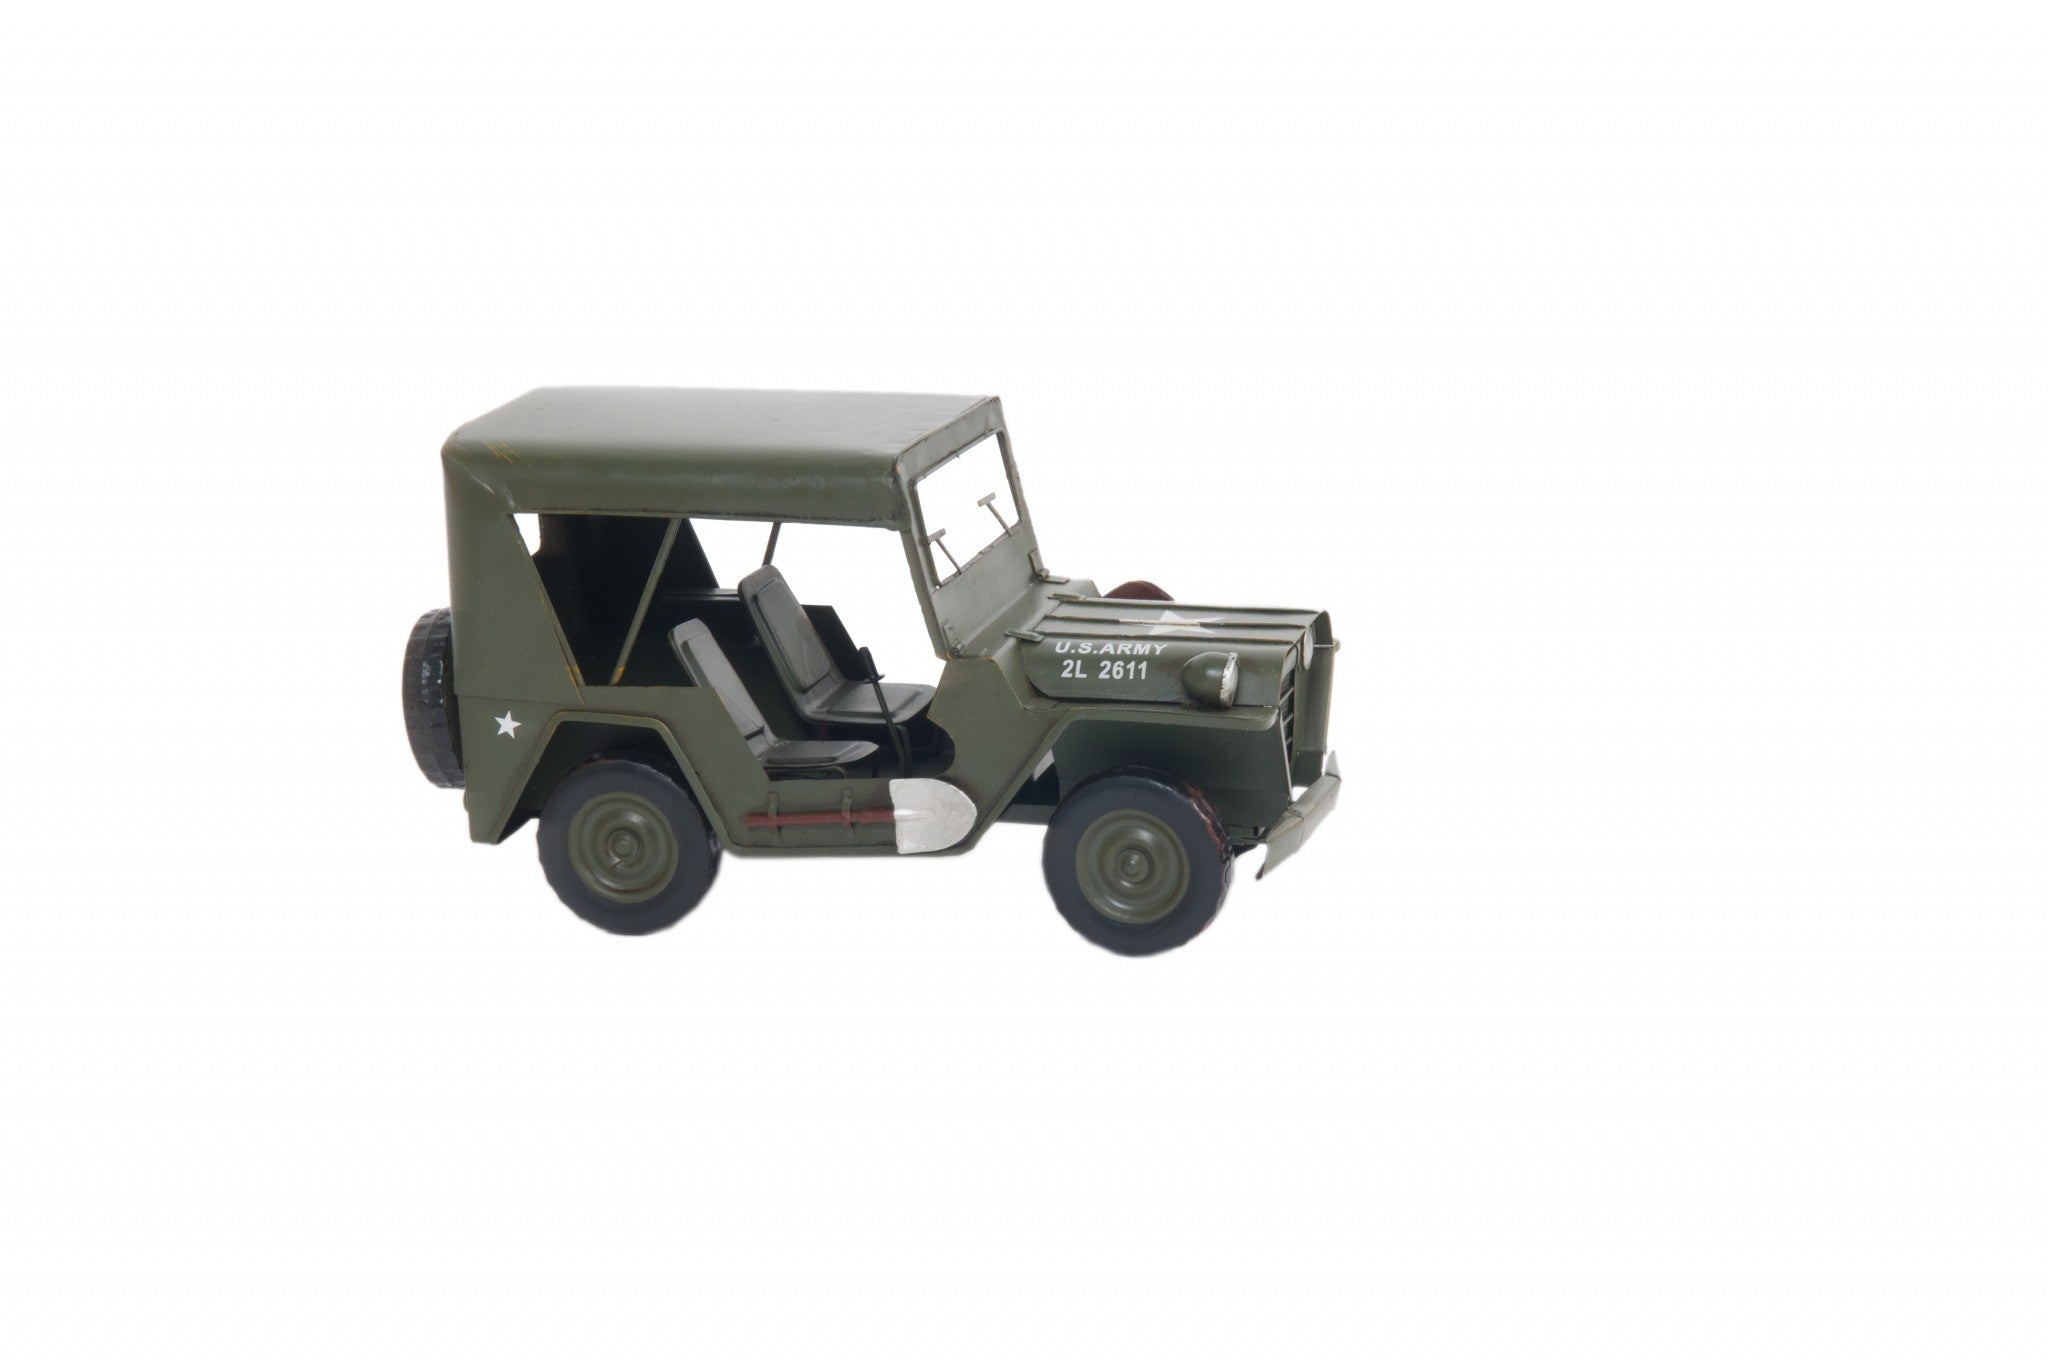 c1940 Willys Quad Overland Jeep Sculpture